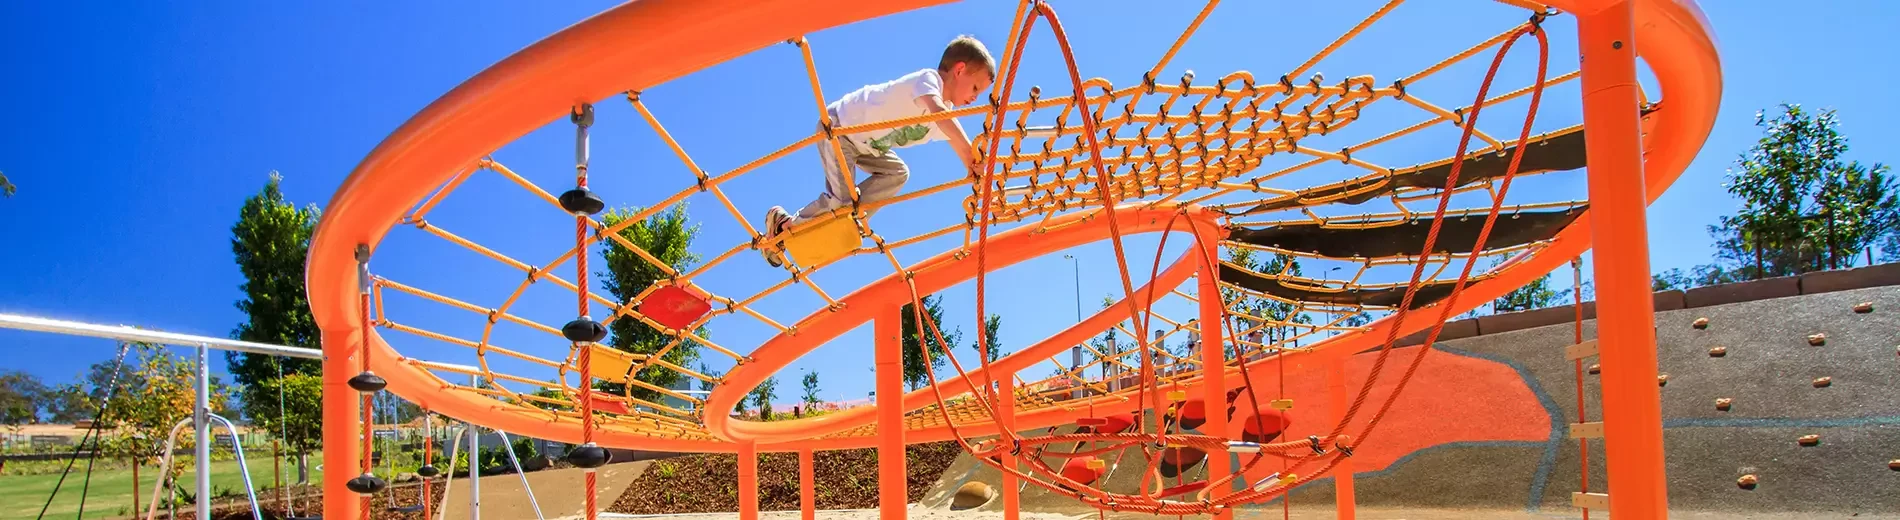 child playing on an orange rope playground corocord loops hero image